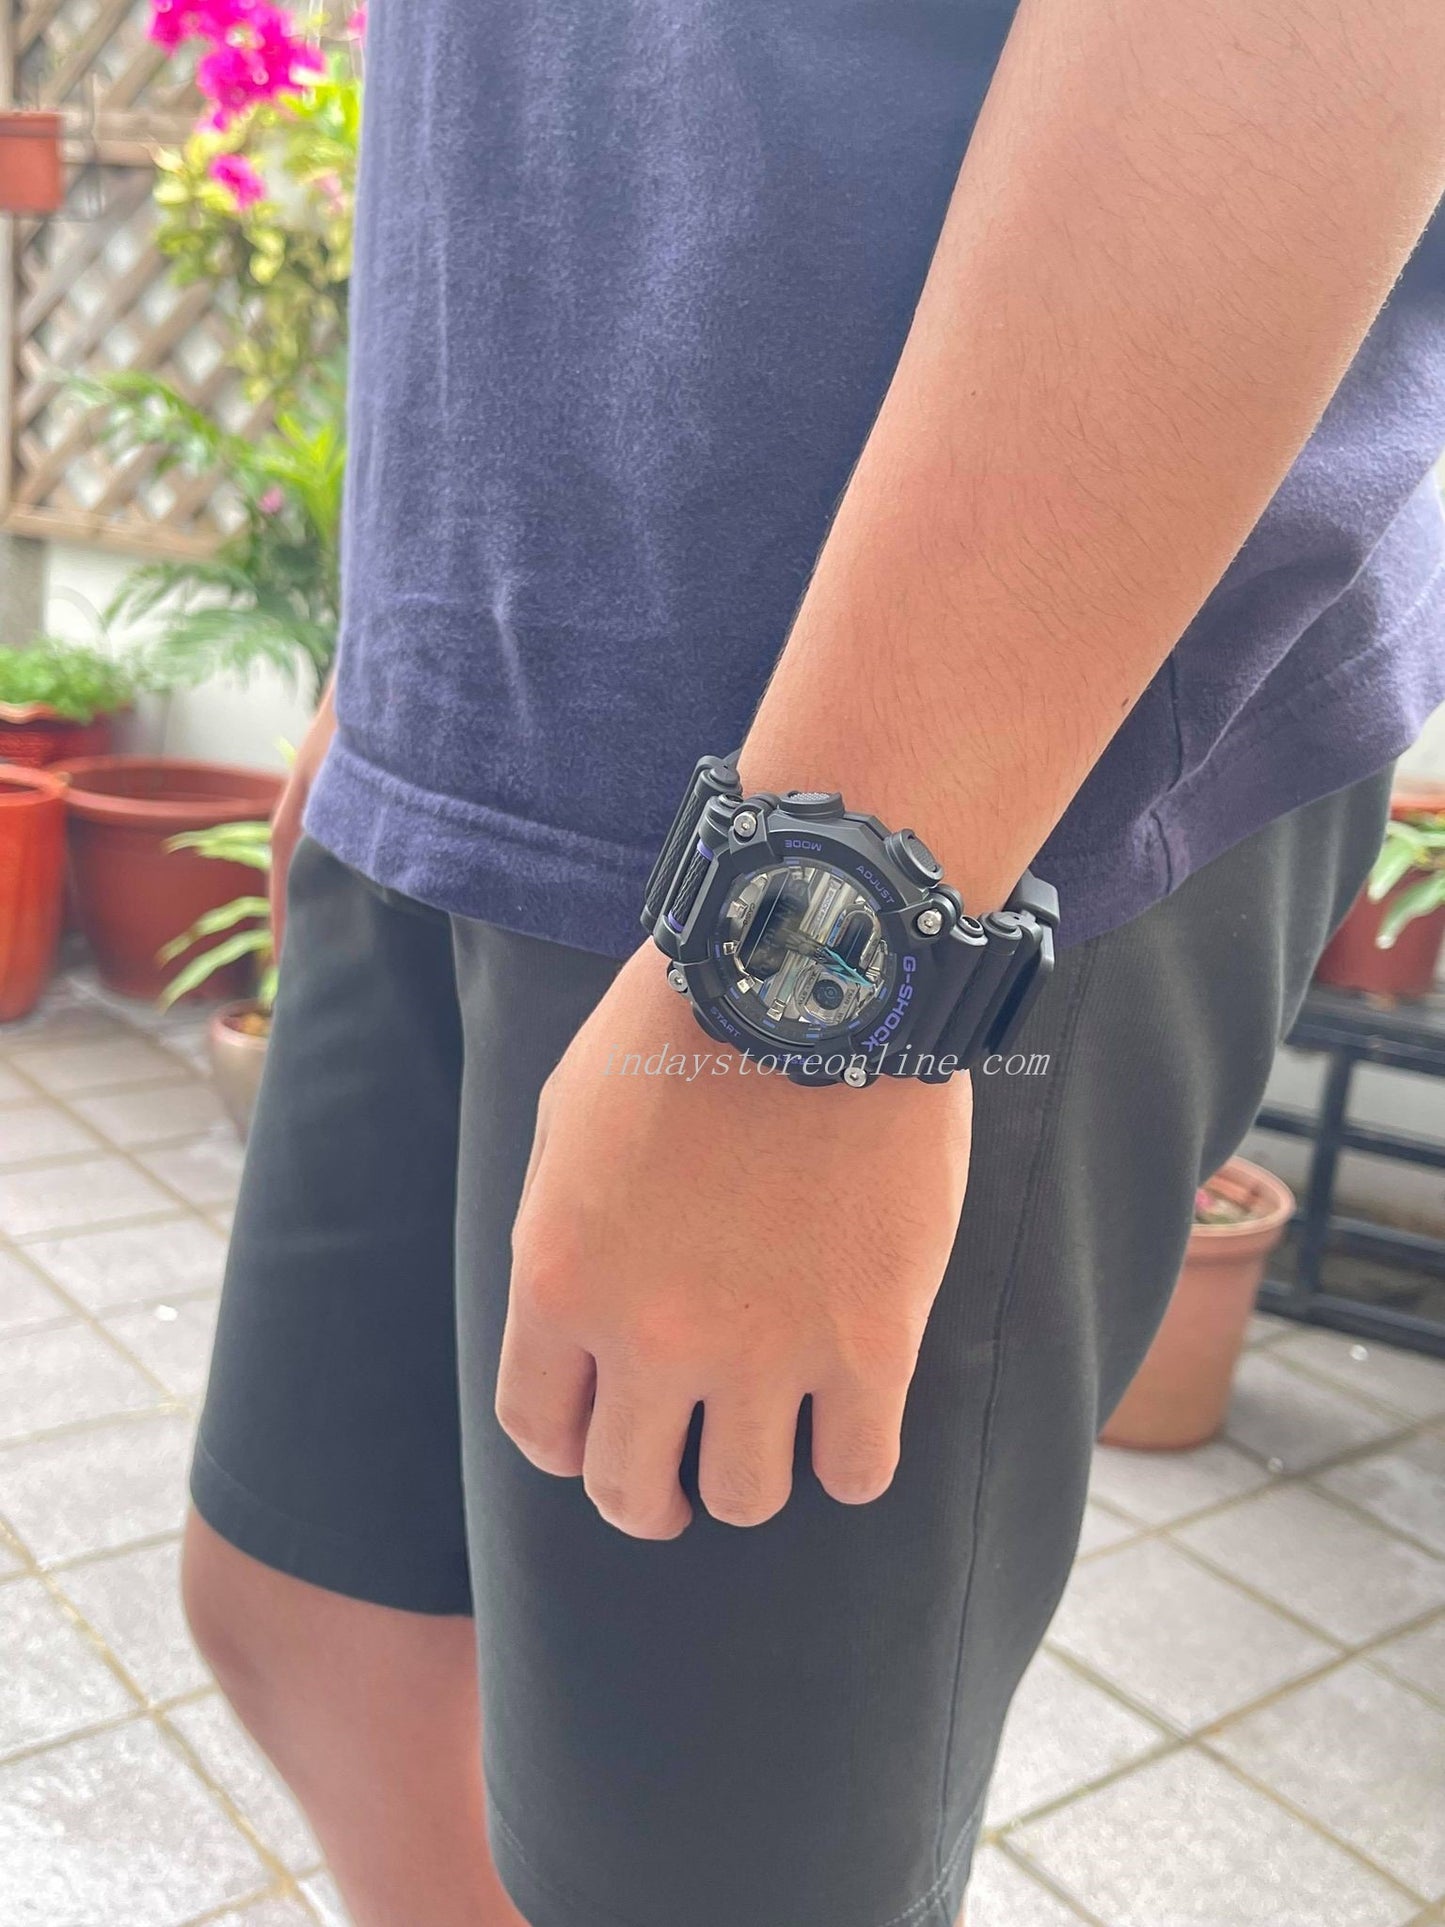 Casio G-Shock Men's Watch GA-900AS-1A Analog-Digital GA-900 GARISH Series Black Color Resin Band Shock Resistant